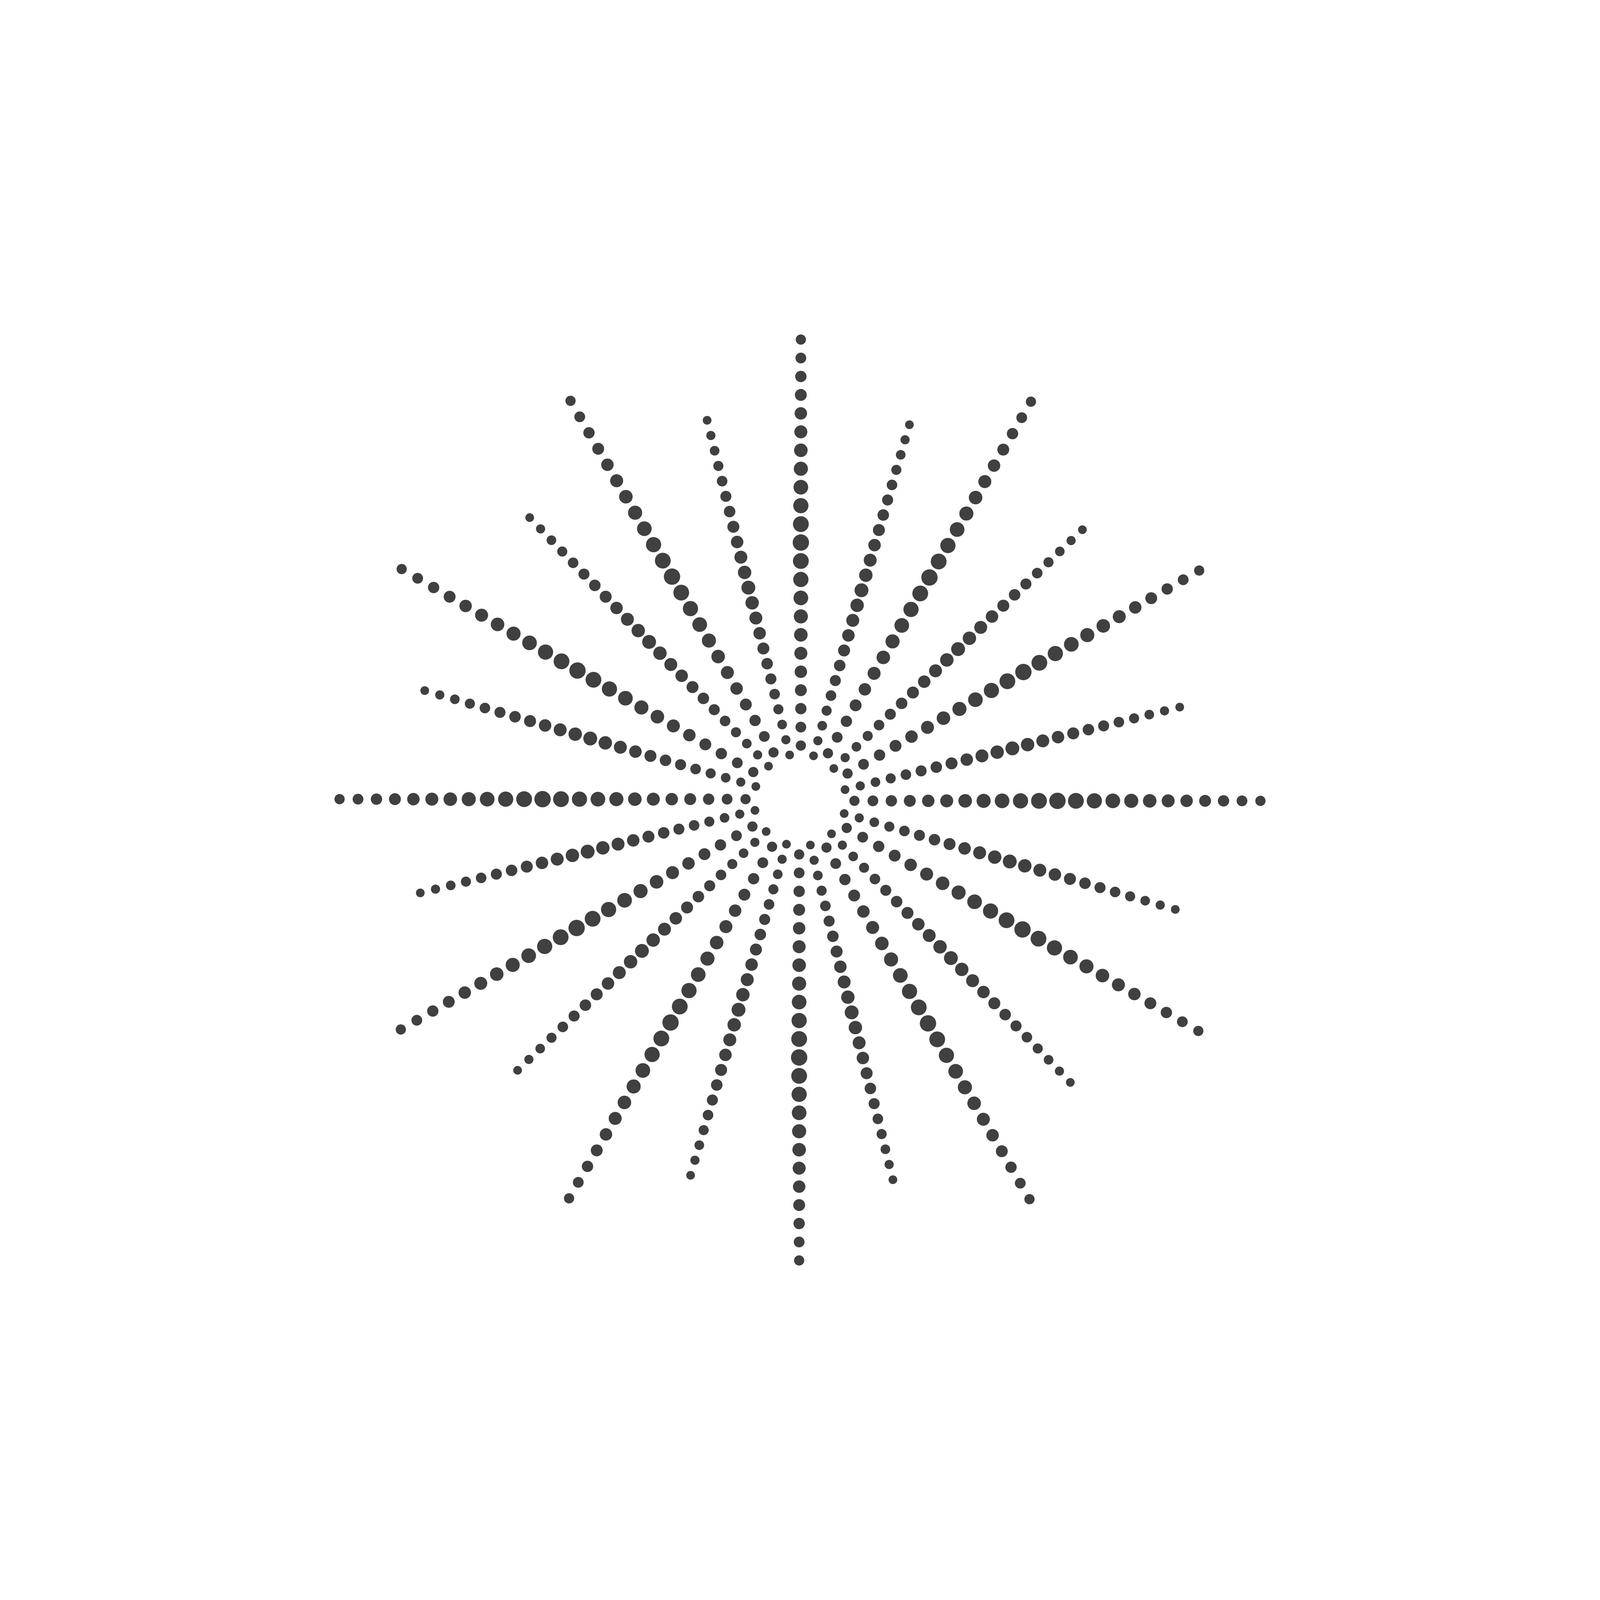 Sunburst icon vector flat design